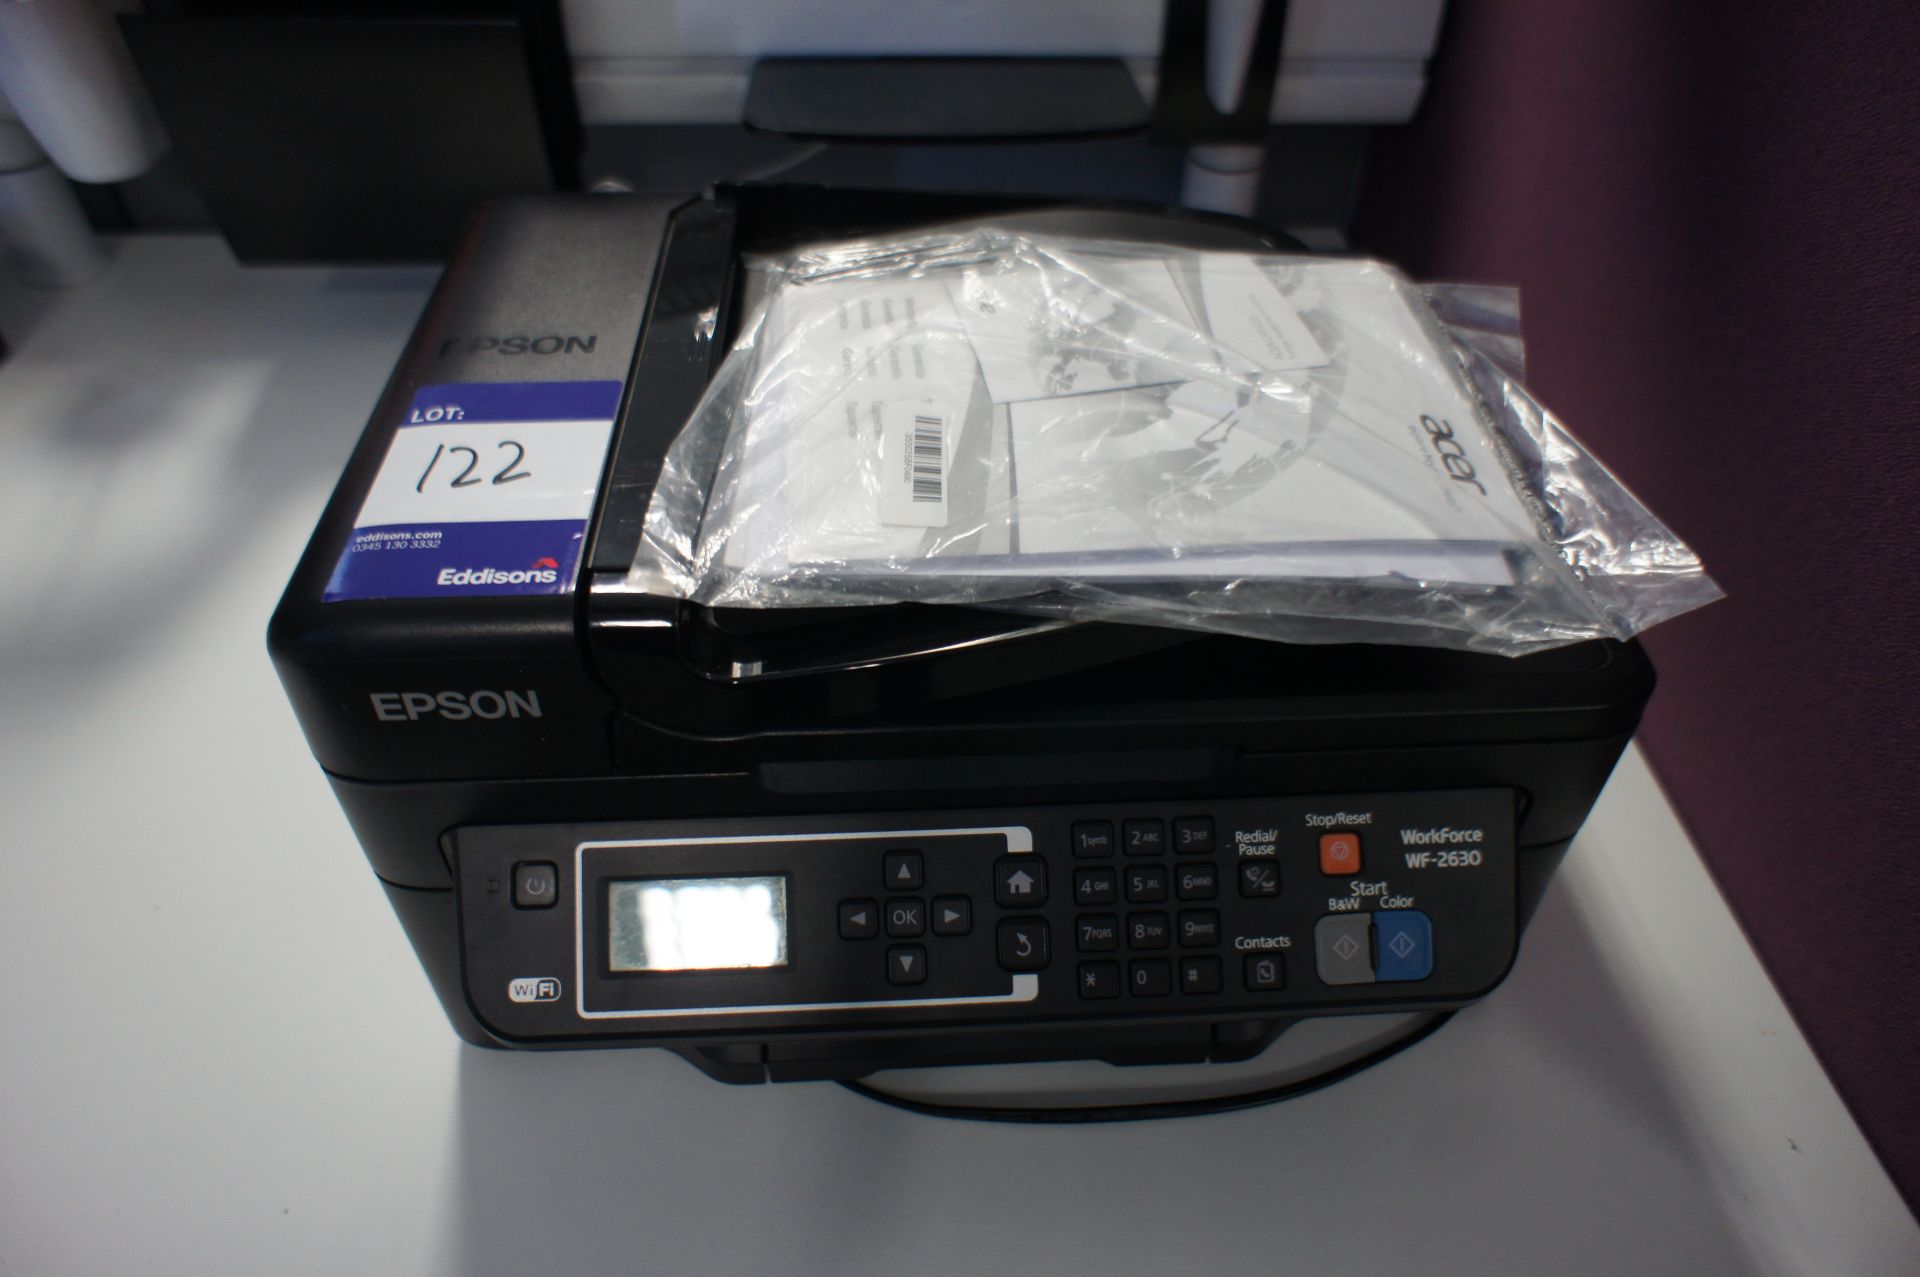 Epson Workforce WF-2630 inkjet printer